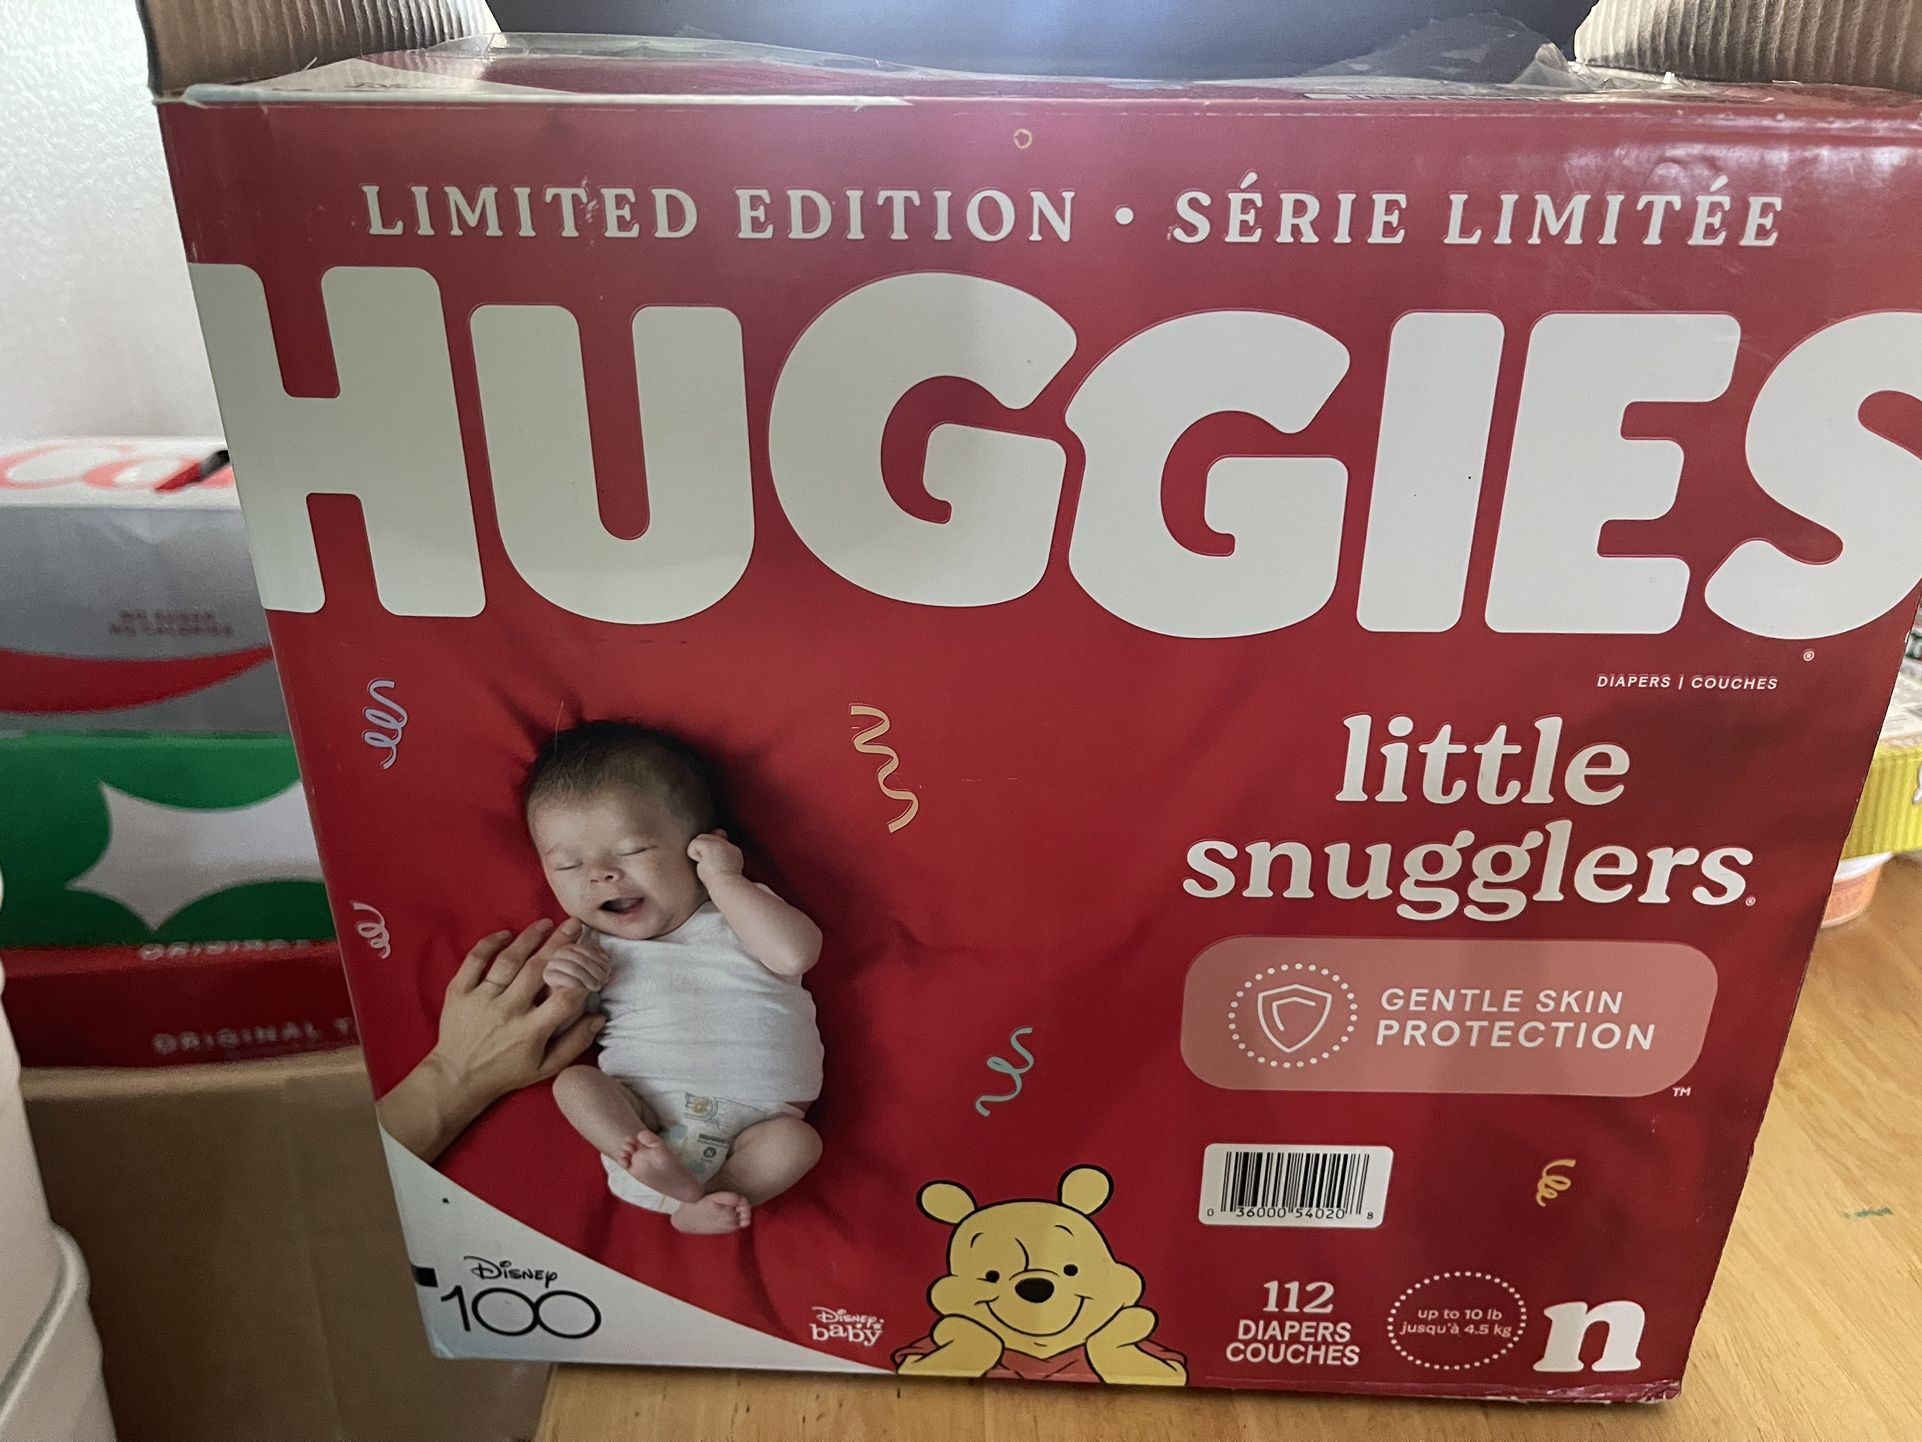 Huggies Little Snuggles Size: New Born